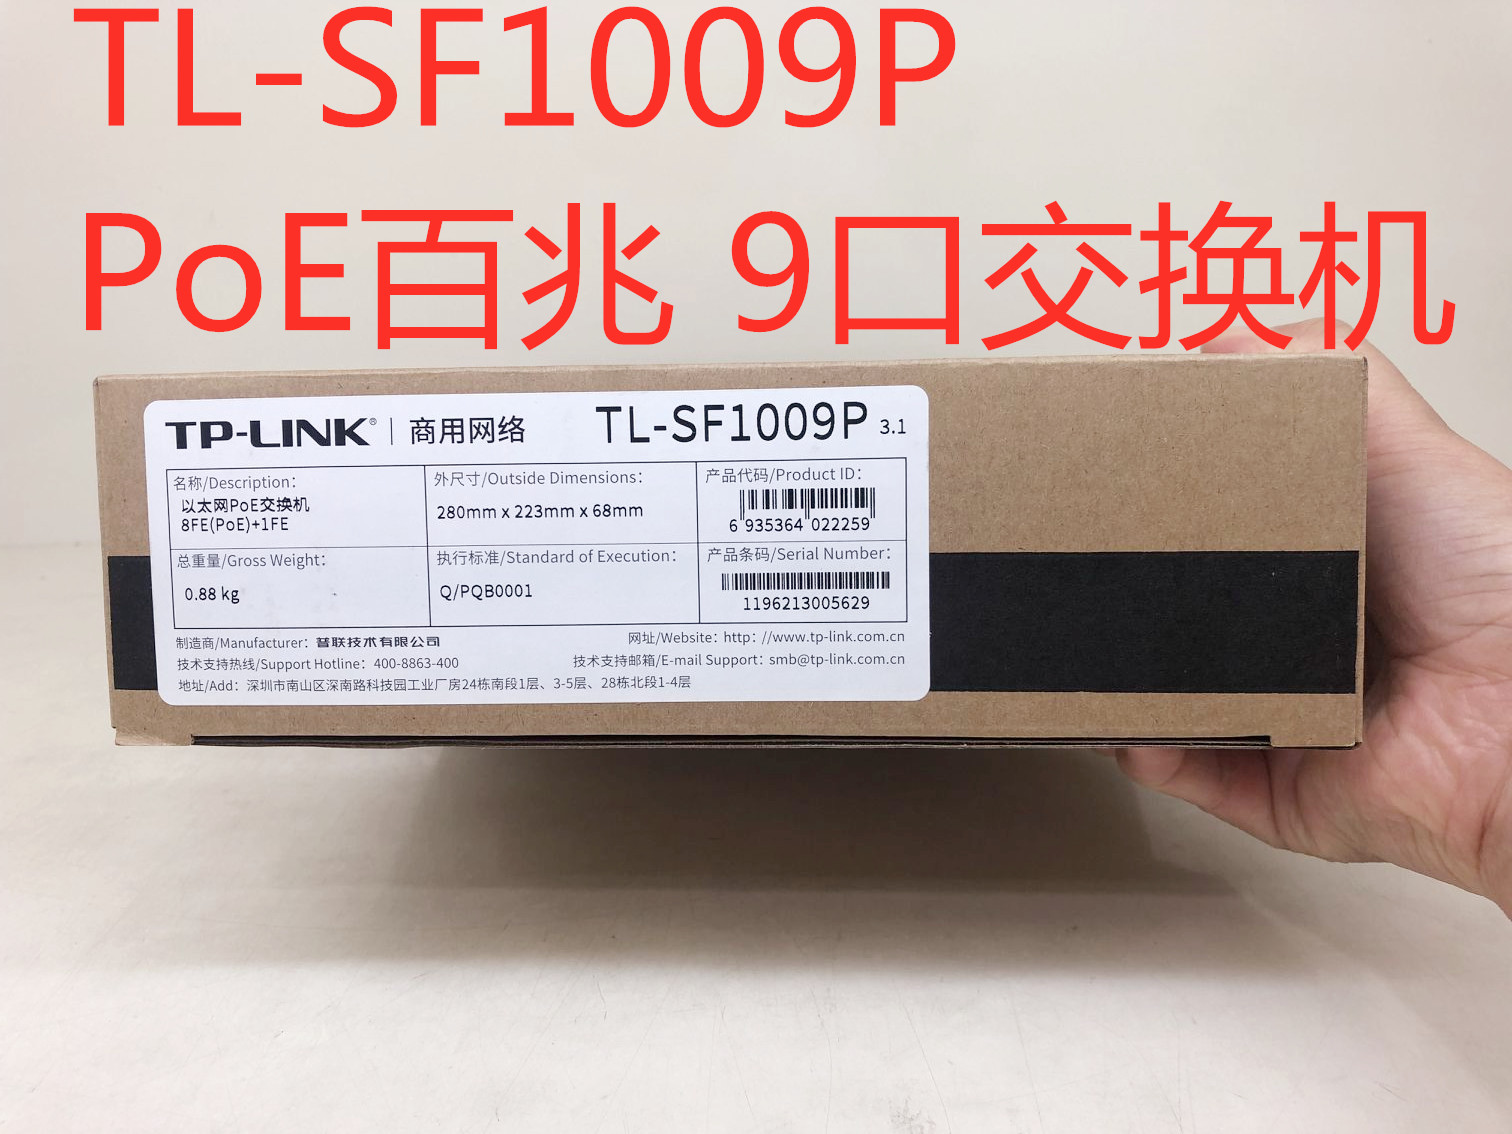 TP-LINK TL-SF1009P 9Ʈ 100M POE ġ ǥ POE     ġ-